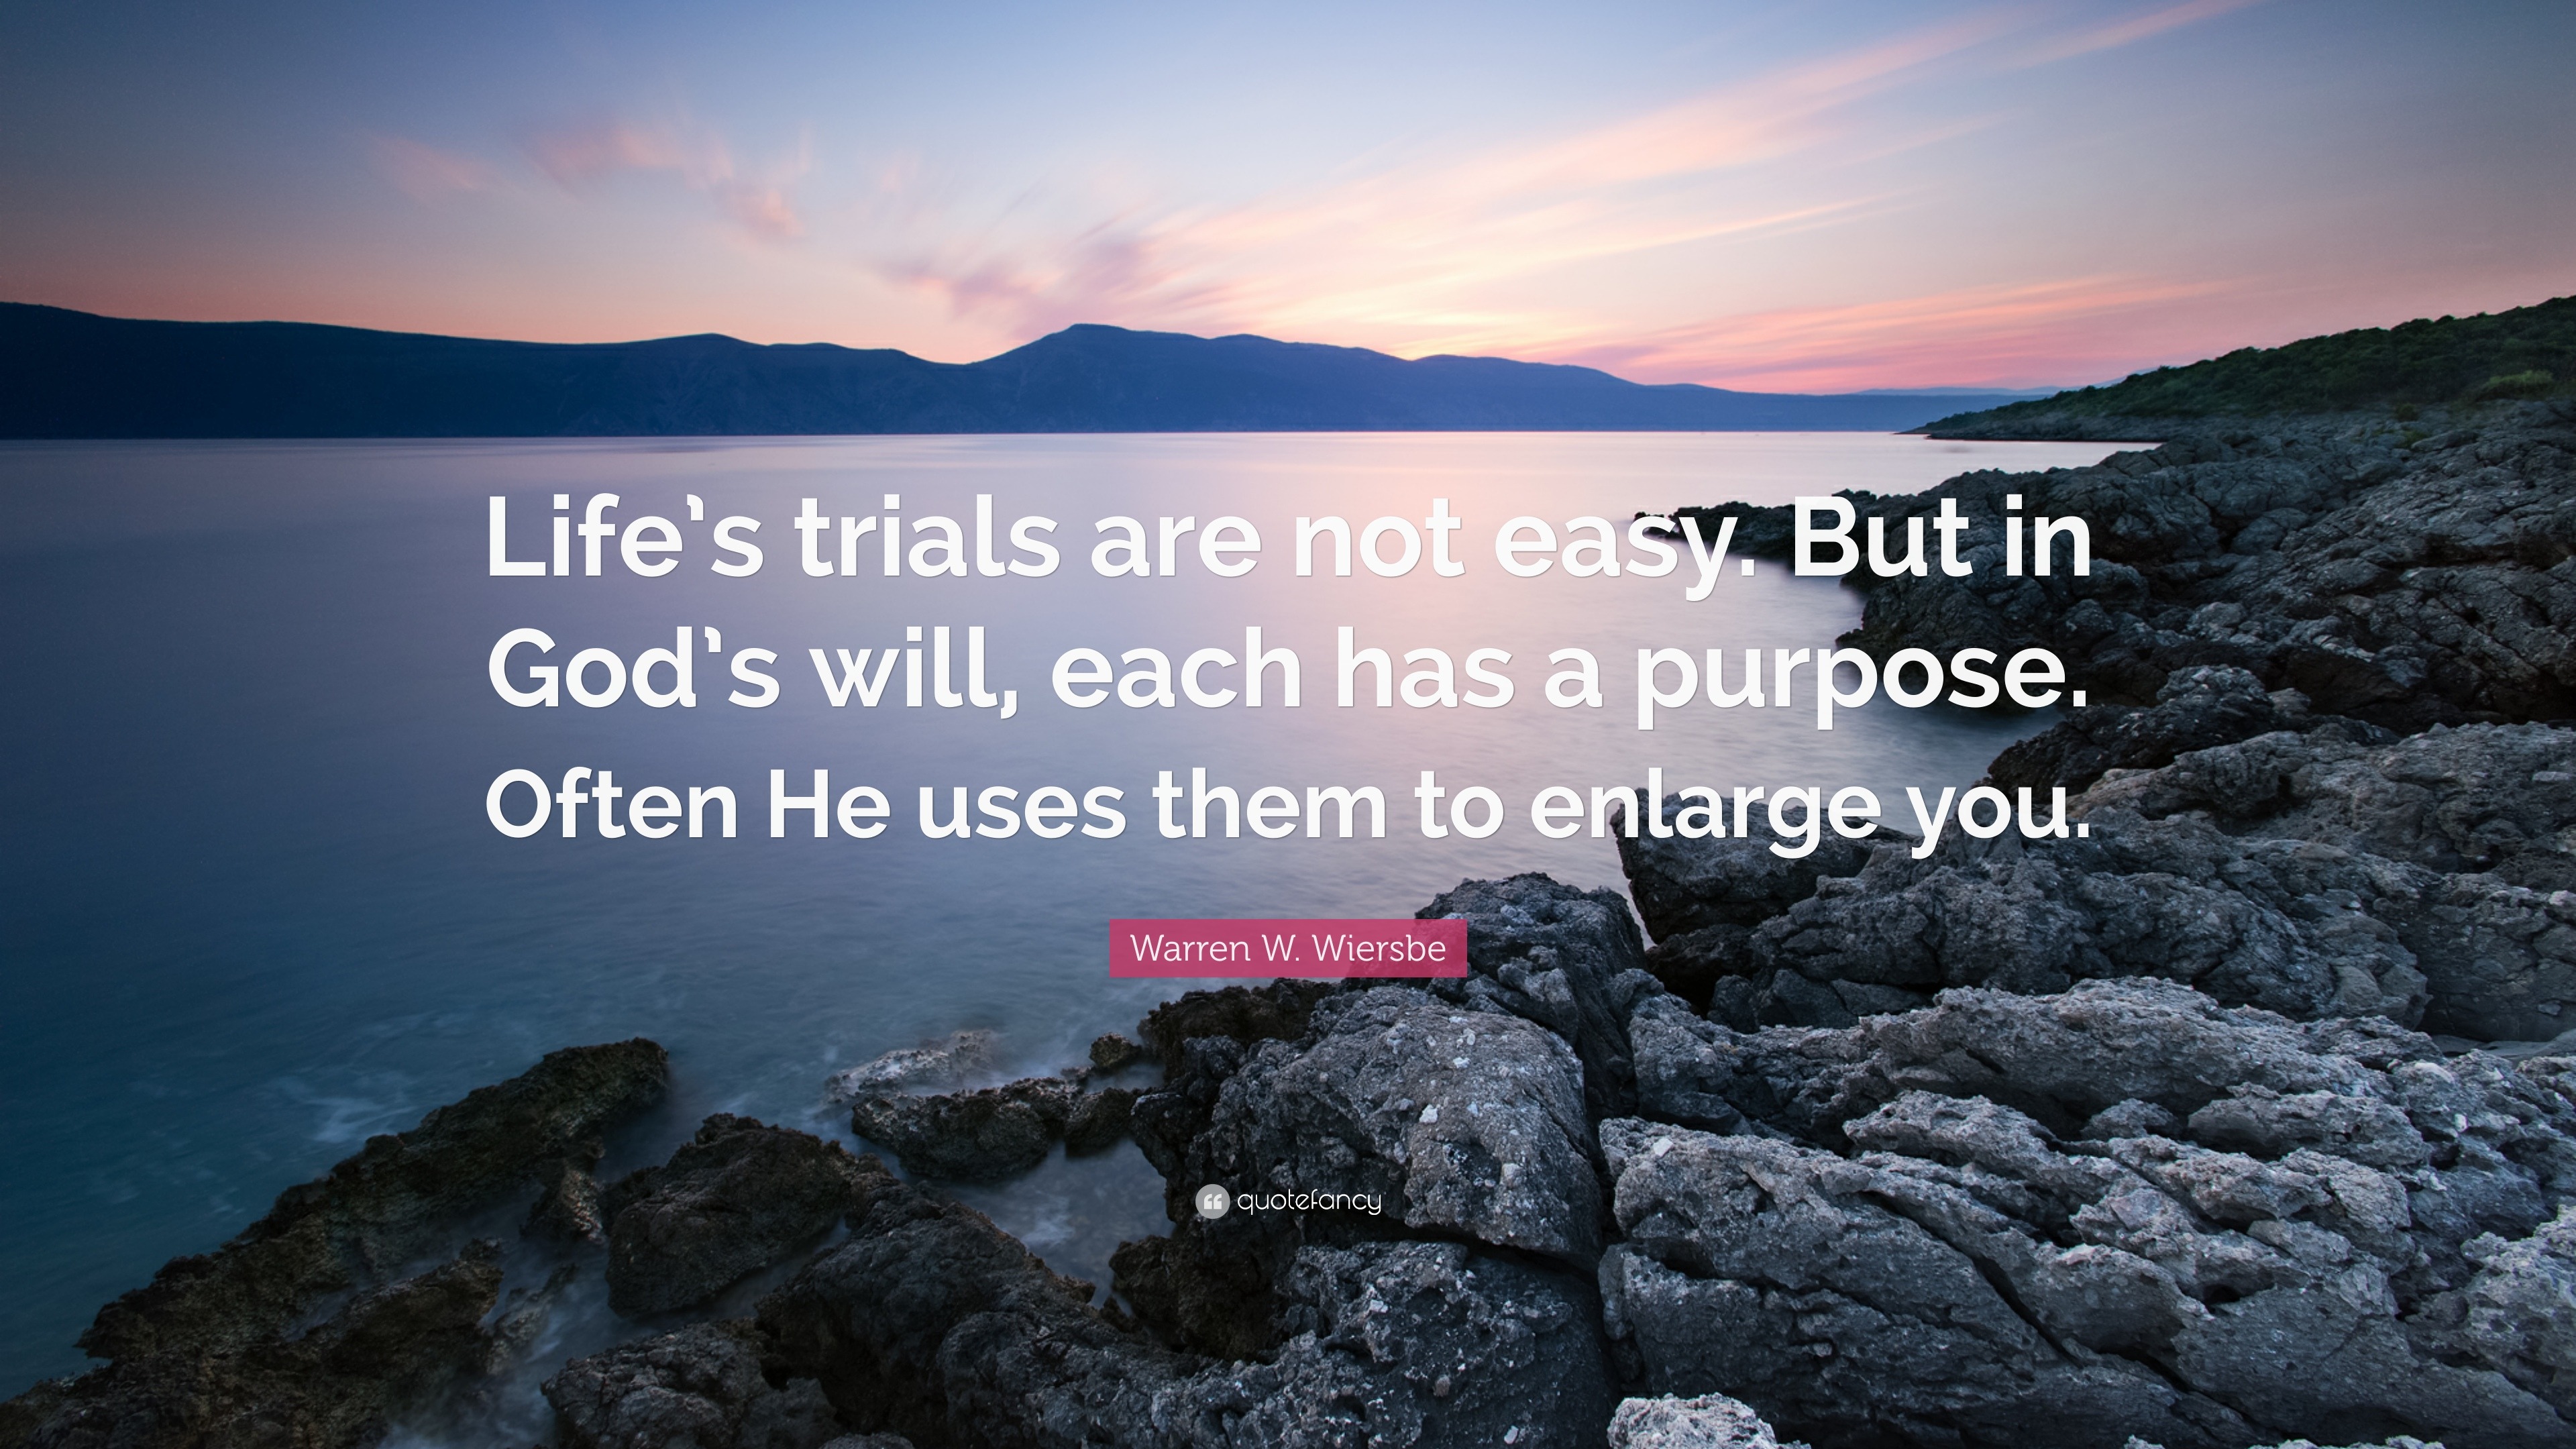 Warren W Wiersbe Quote “Life s trials are not easy But in God s